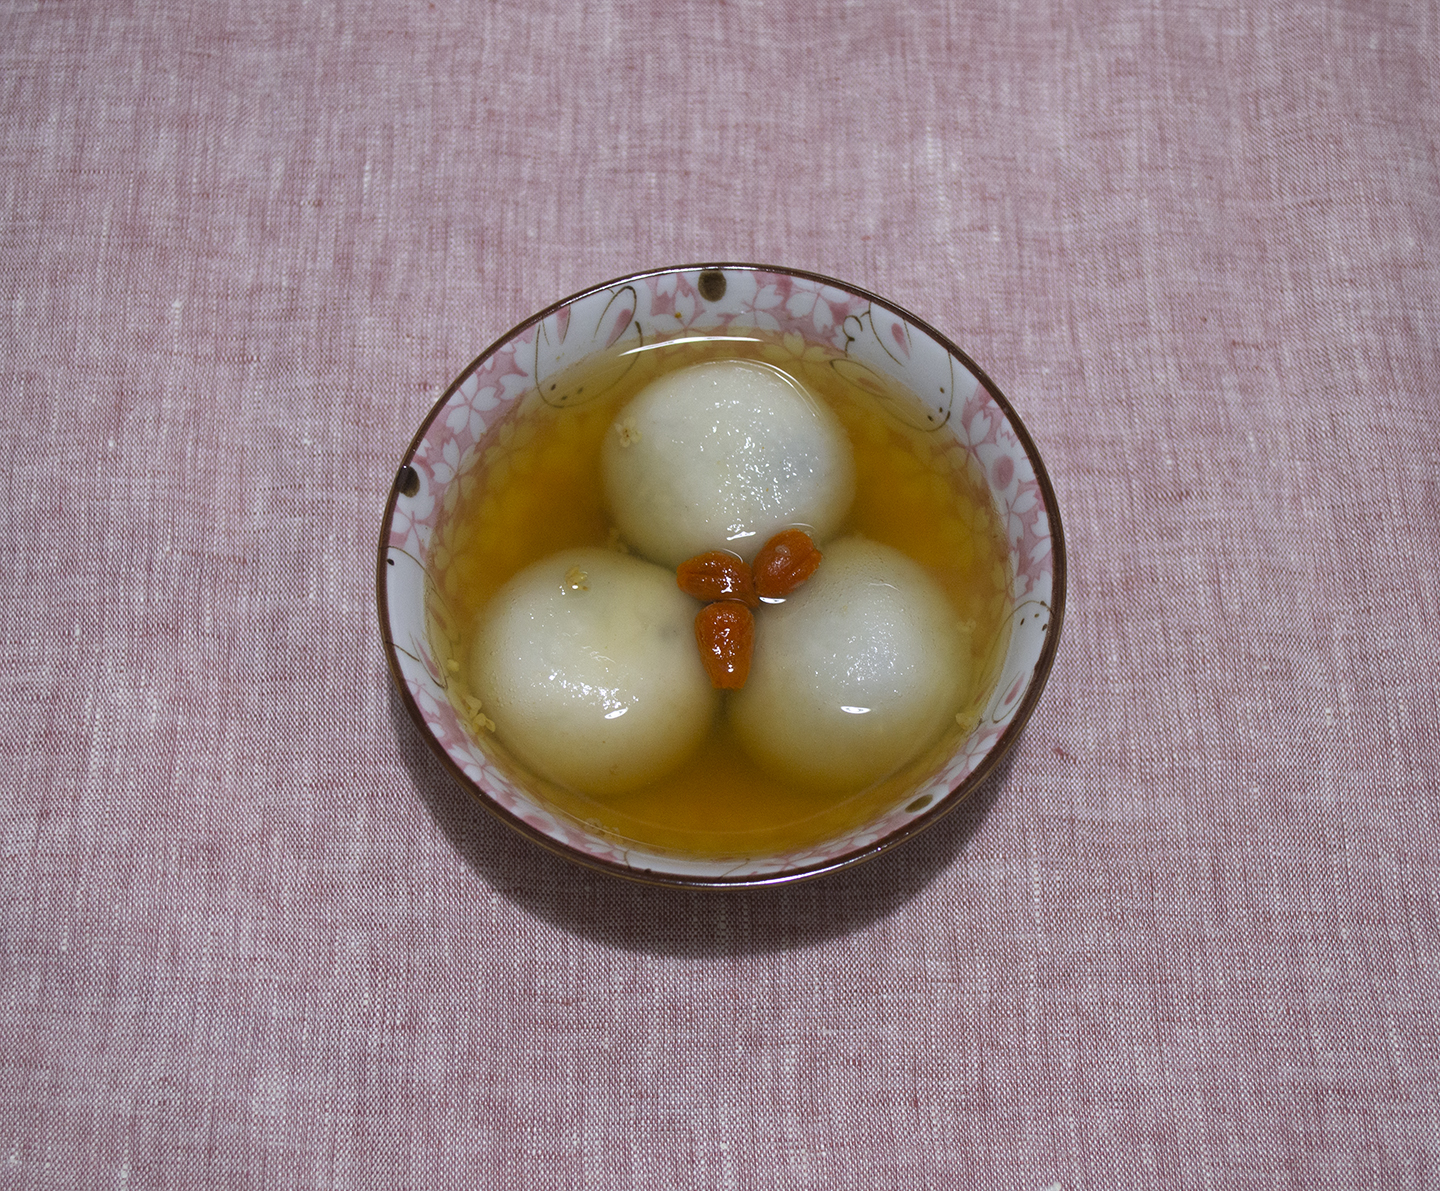 Hēi Zhīma Tāngyuán (黑芝麻湯圓) - Black Sesame Rice Balls in Ginger and Osmanthus Syrup